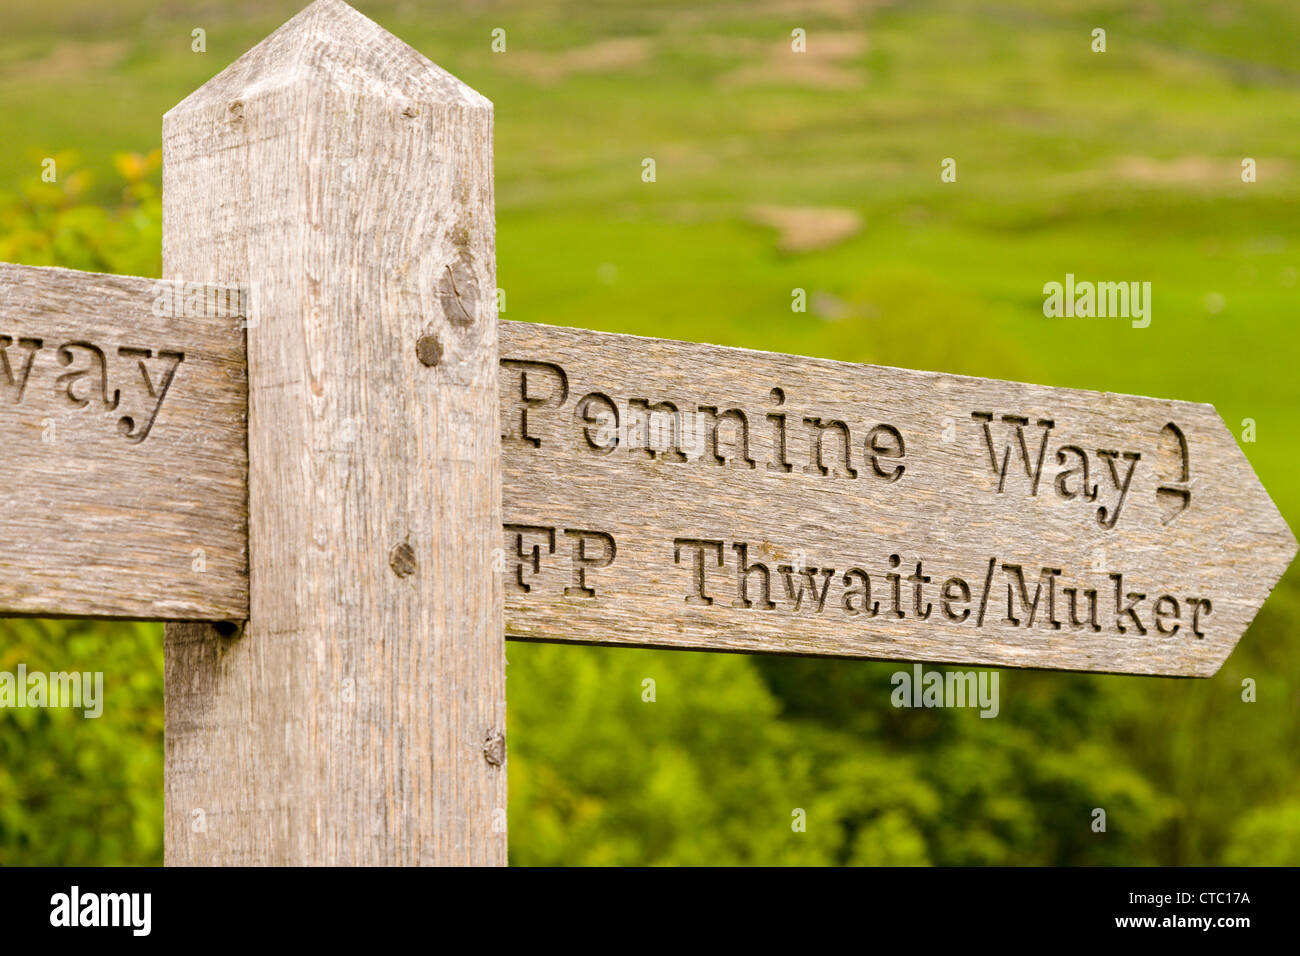 Pennine Way sign post, Yorkshire Stock Photo